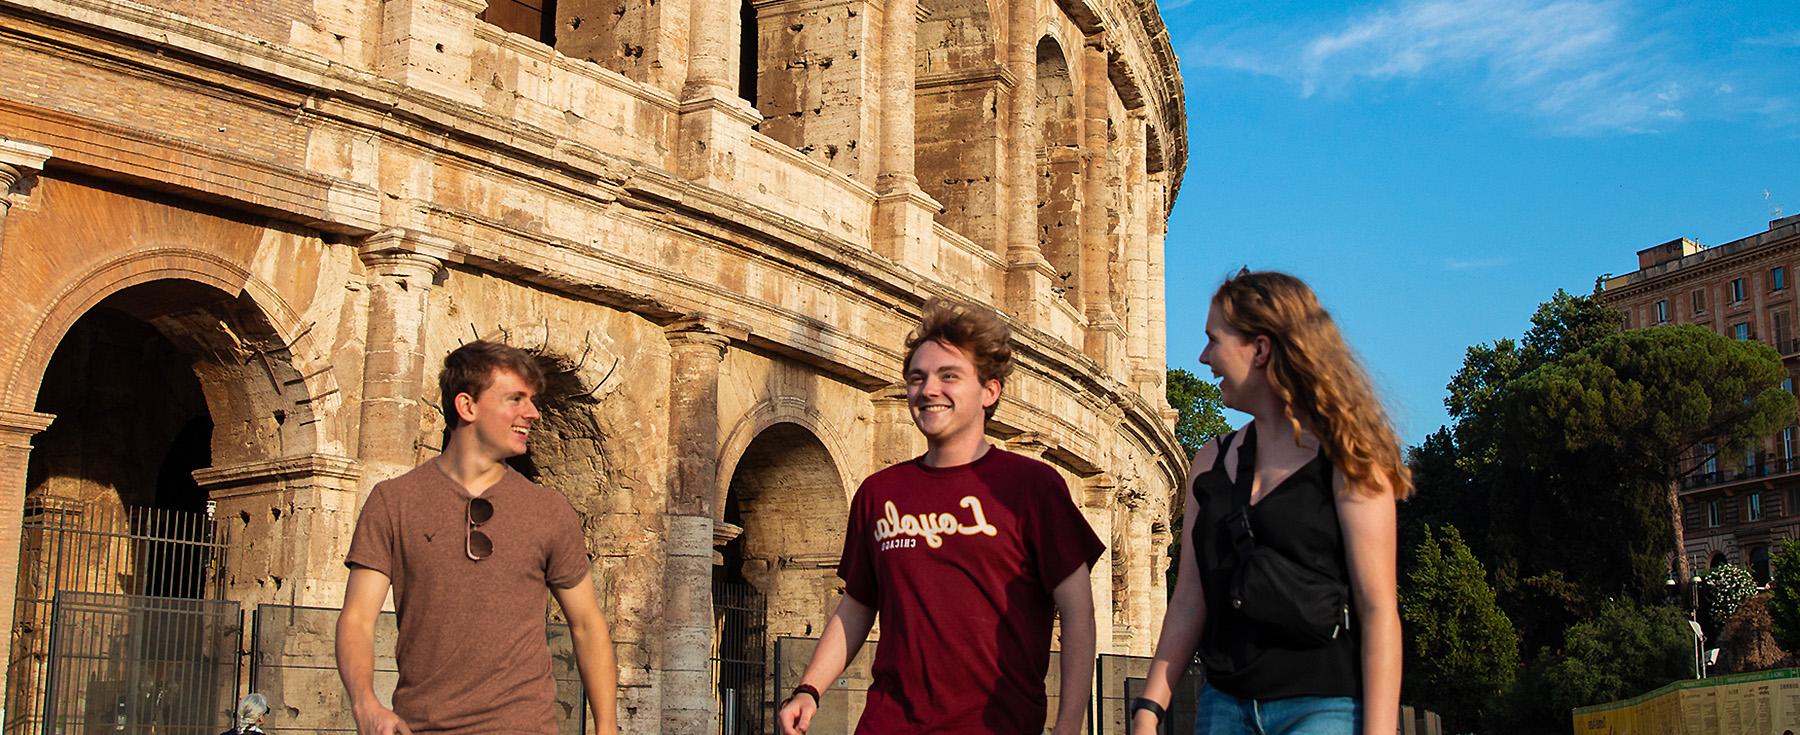 Loyola students walk next to the iconic Rome Coliseum